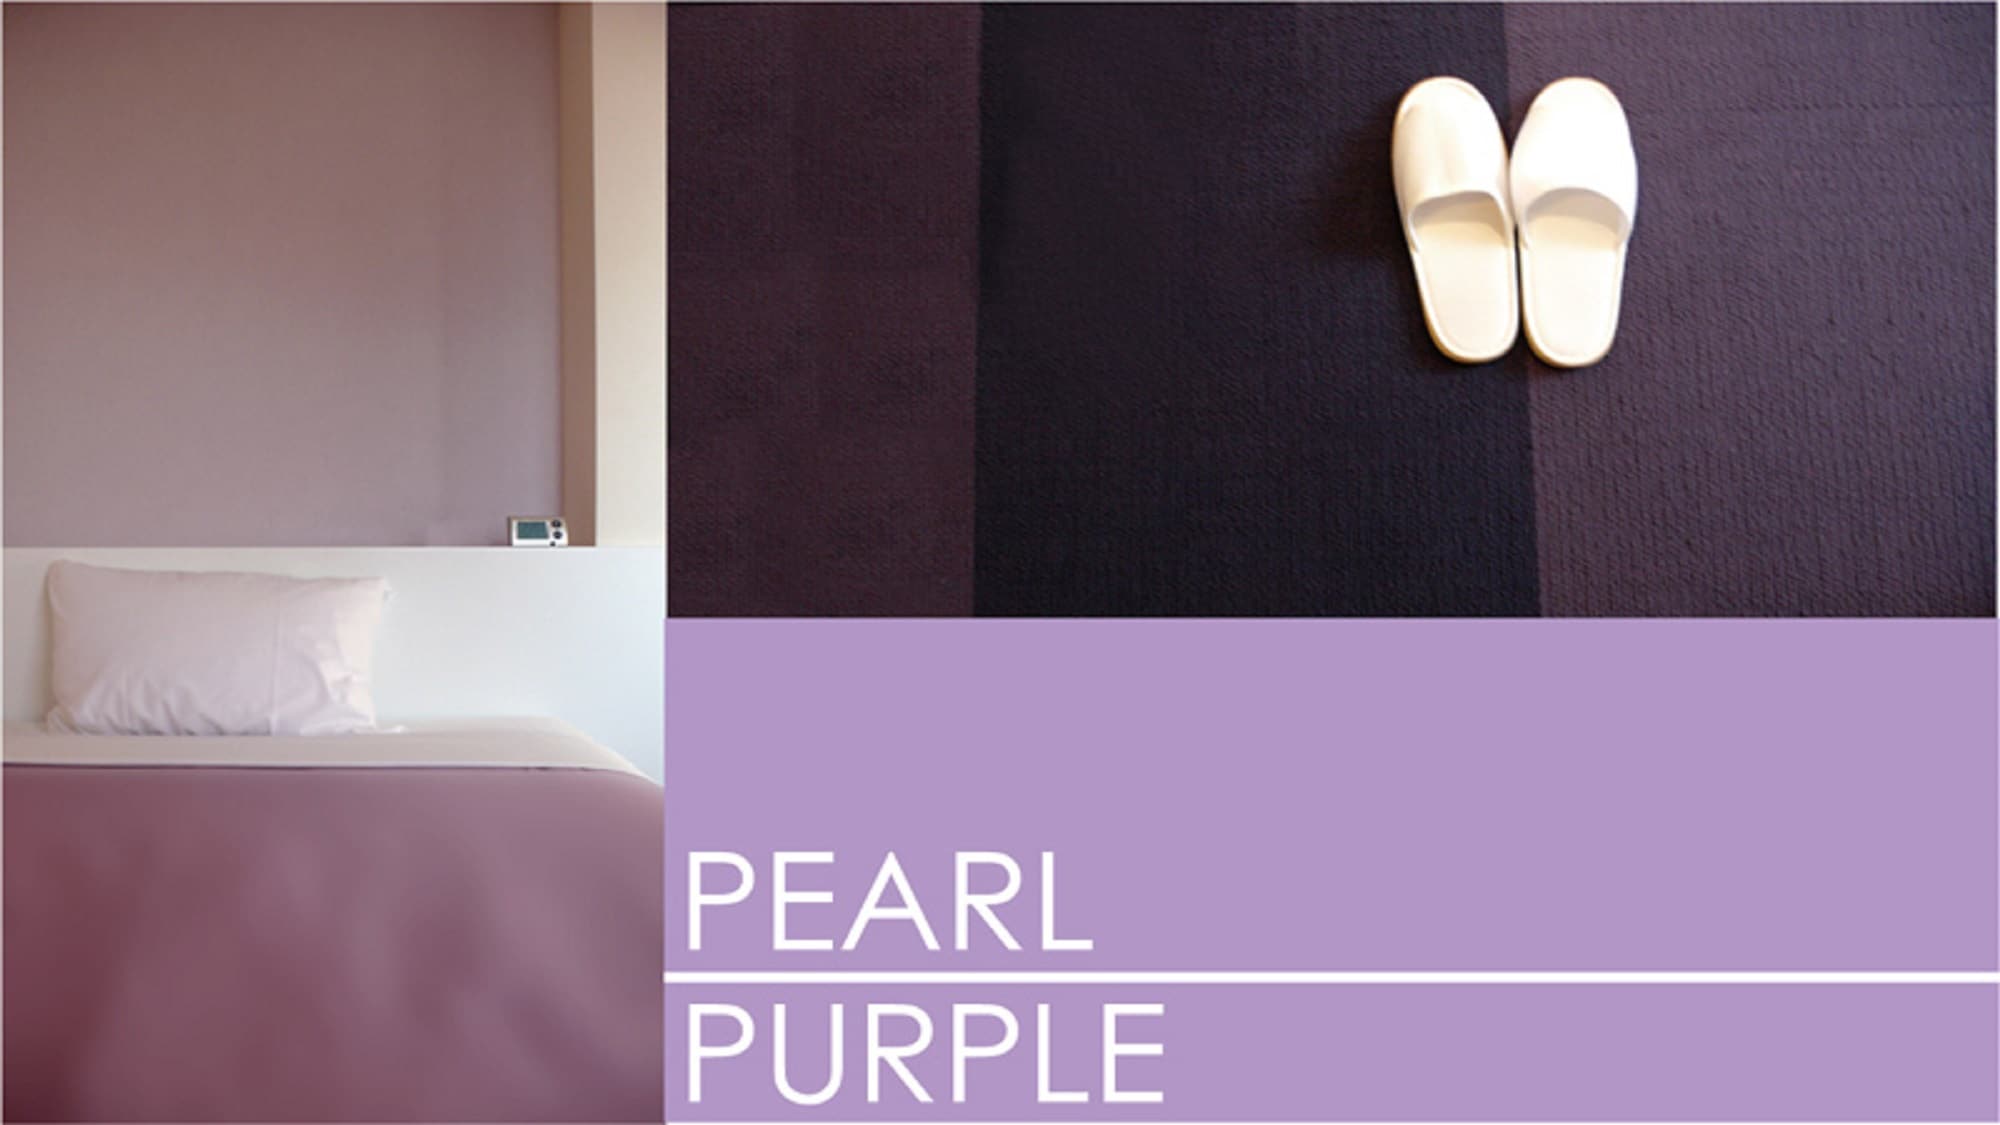 Tipe warna kamar Pearl & amp; Purple